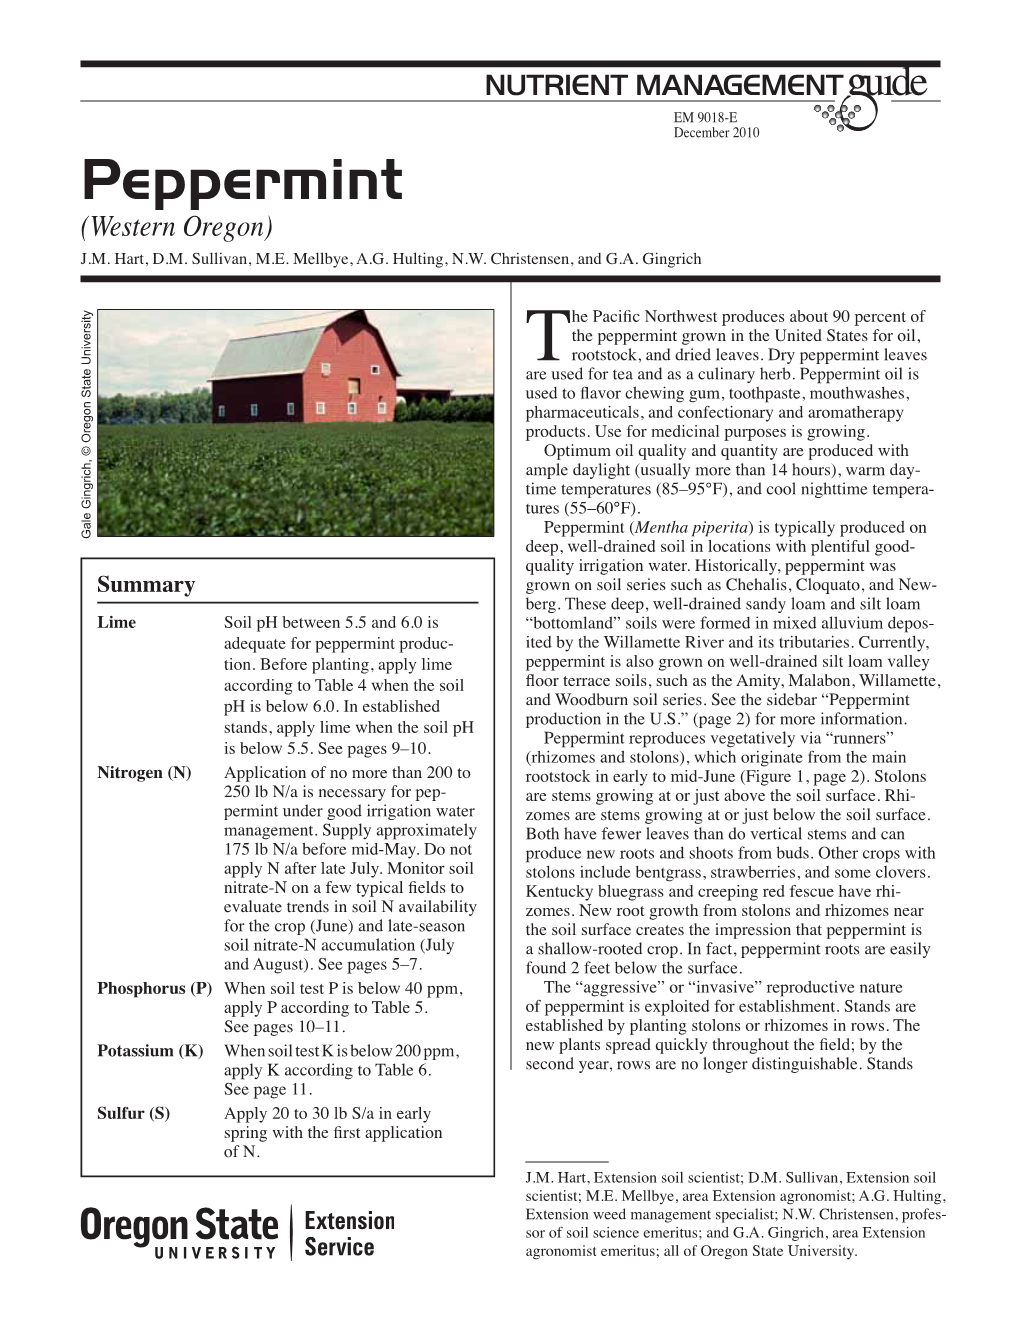 Peppermint (Western Oregon) Nutrient Management Guide